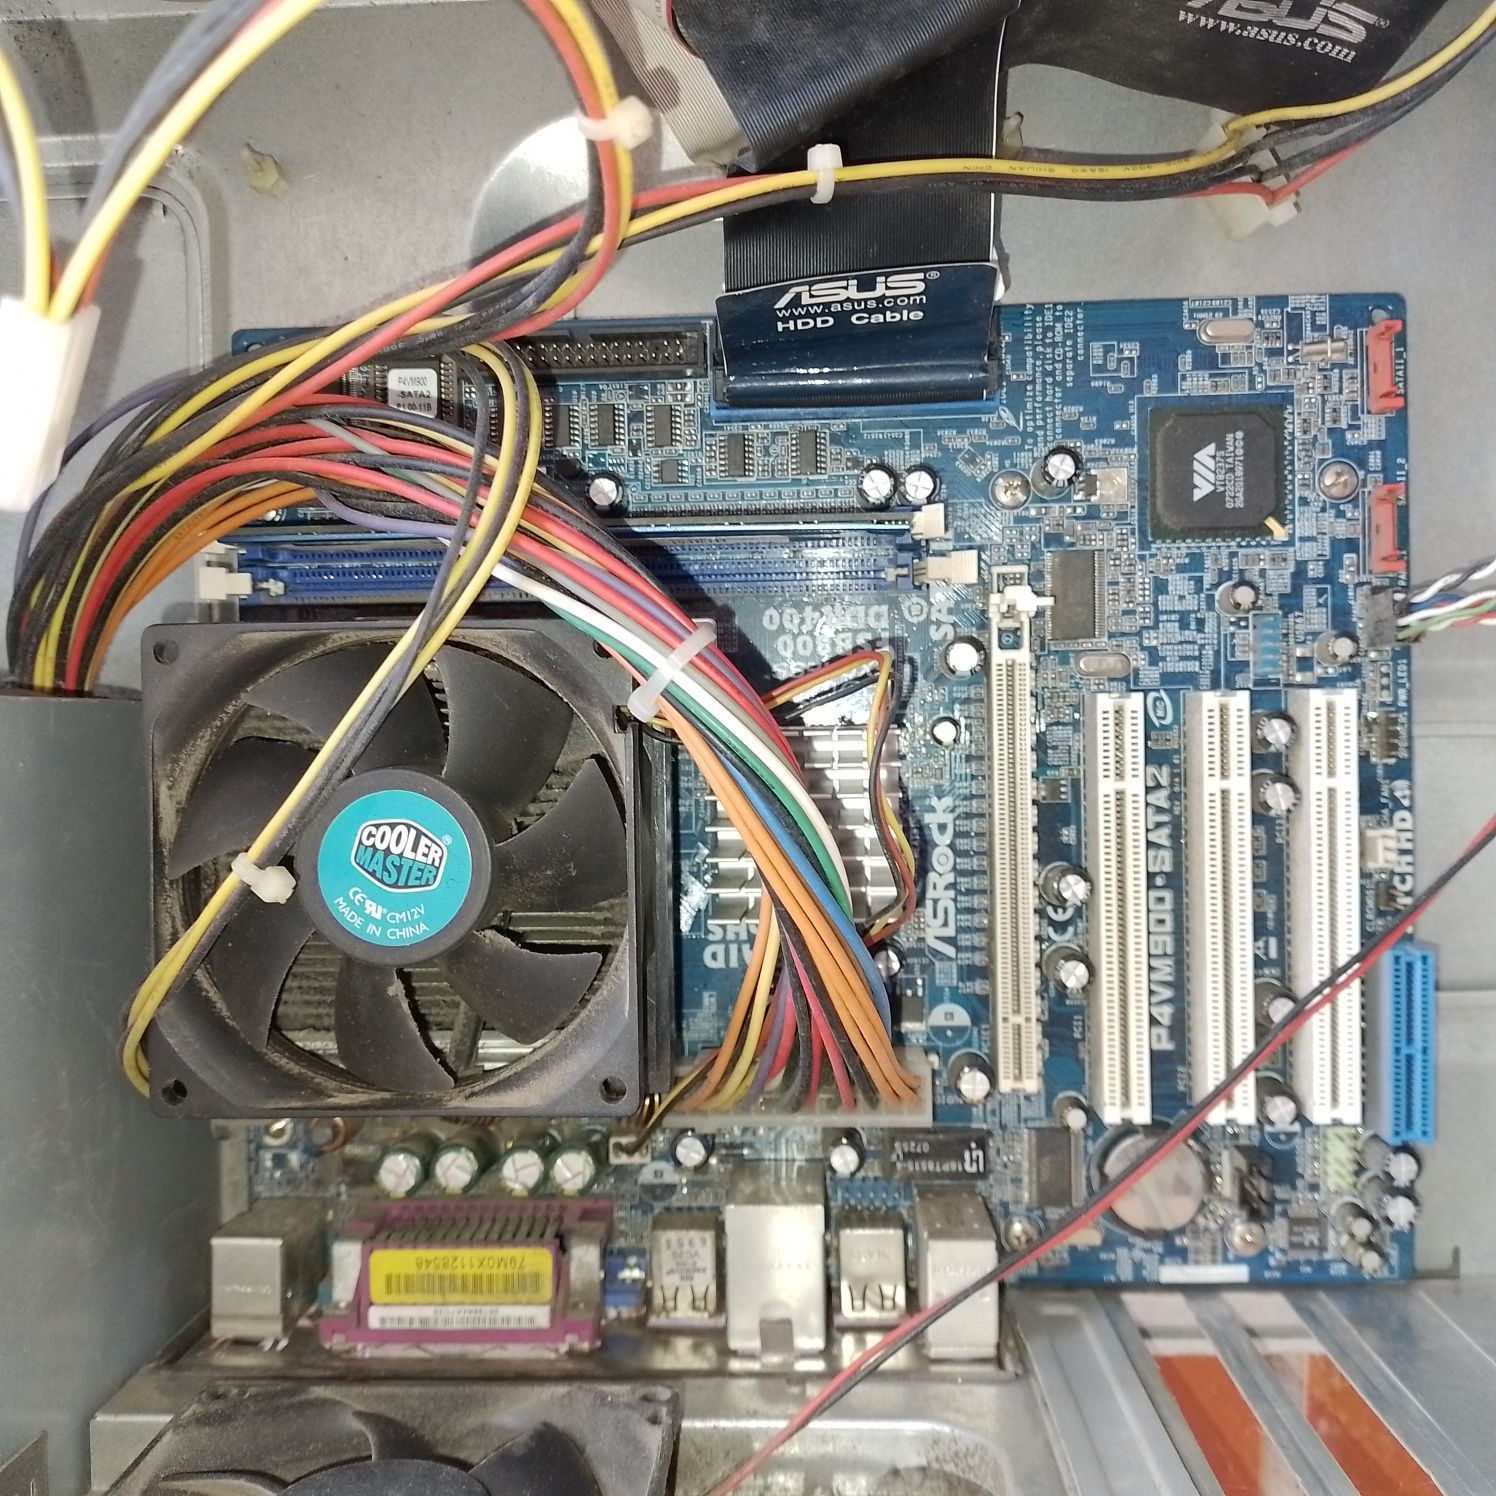 Motherboard ASROCK P4VM900 - SATA 2